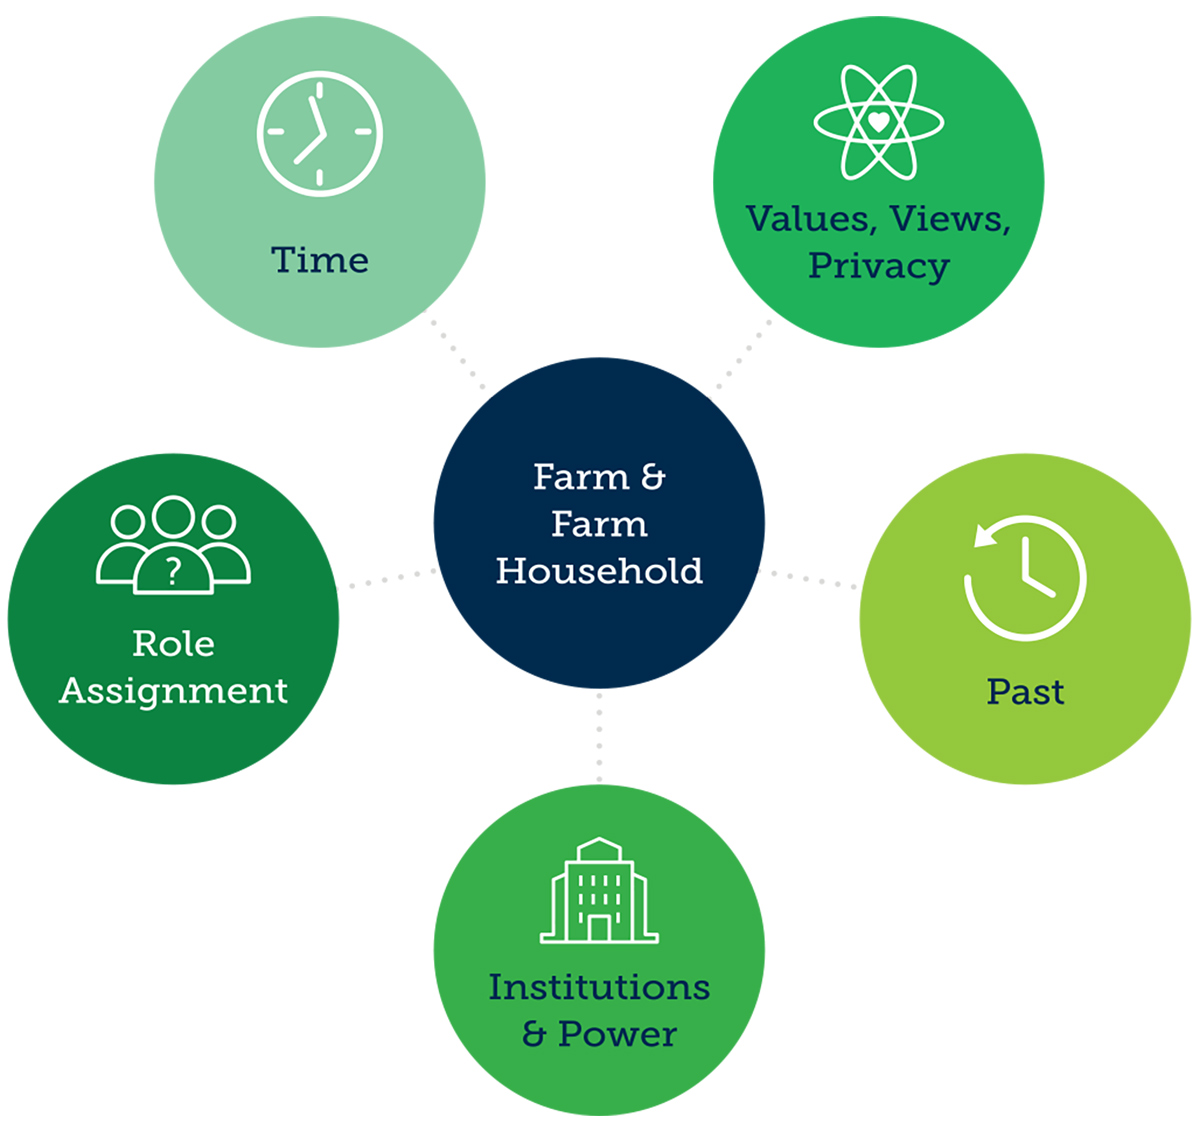 Financial Literary on Farms – Key Influences mind map diagram representation